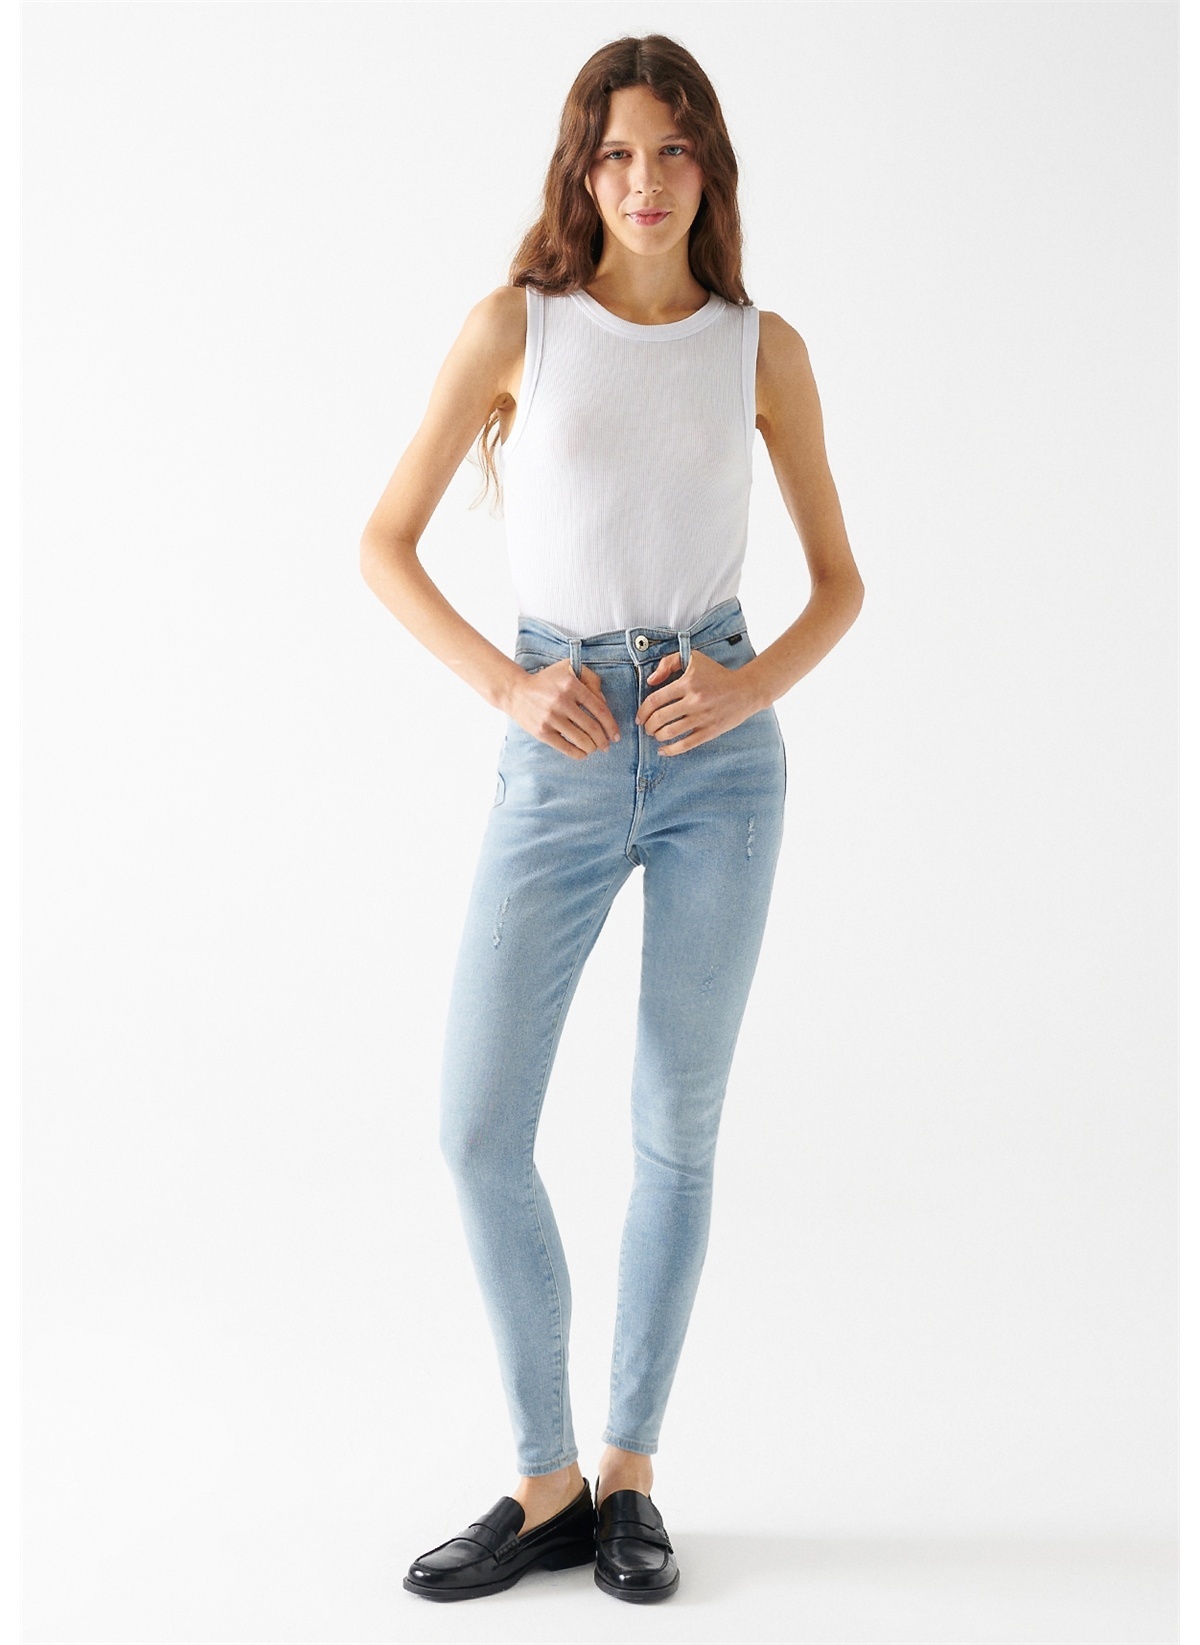 Mavi Jeans Serenay Mavi Kot Pantolon (100980-33430)